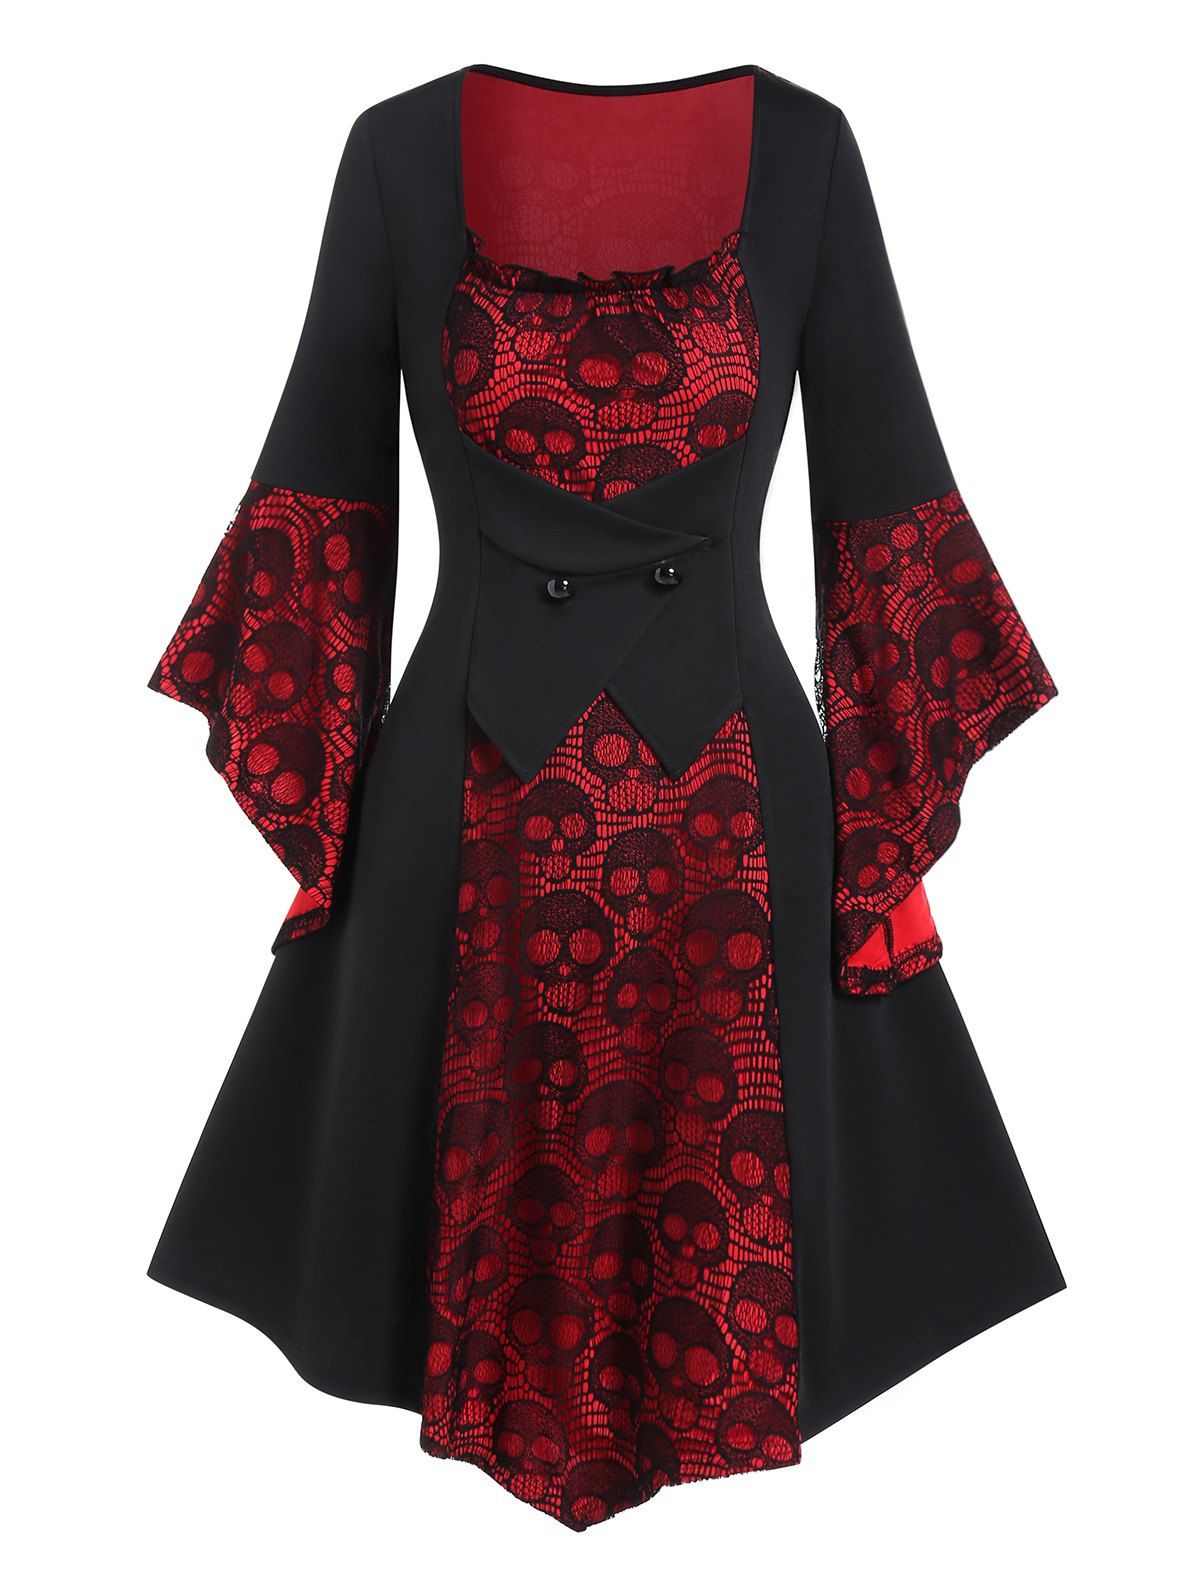 Sheer Skull Lace Insert Gothic Dress Colorblock Mock Button Lace Up Asymmetric Dress - BLACK XL